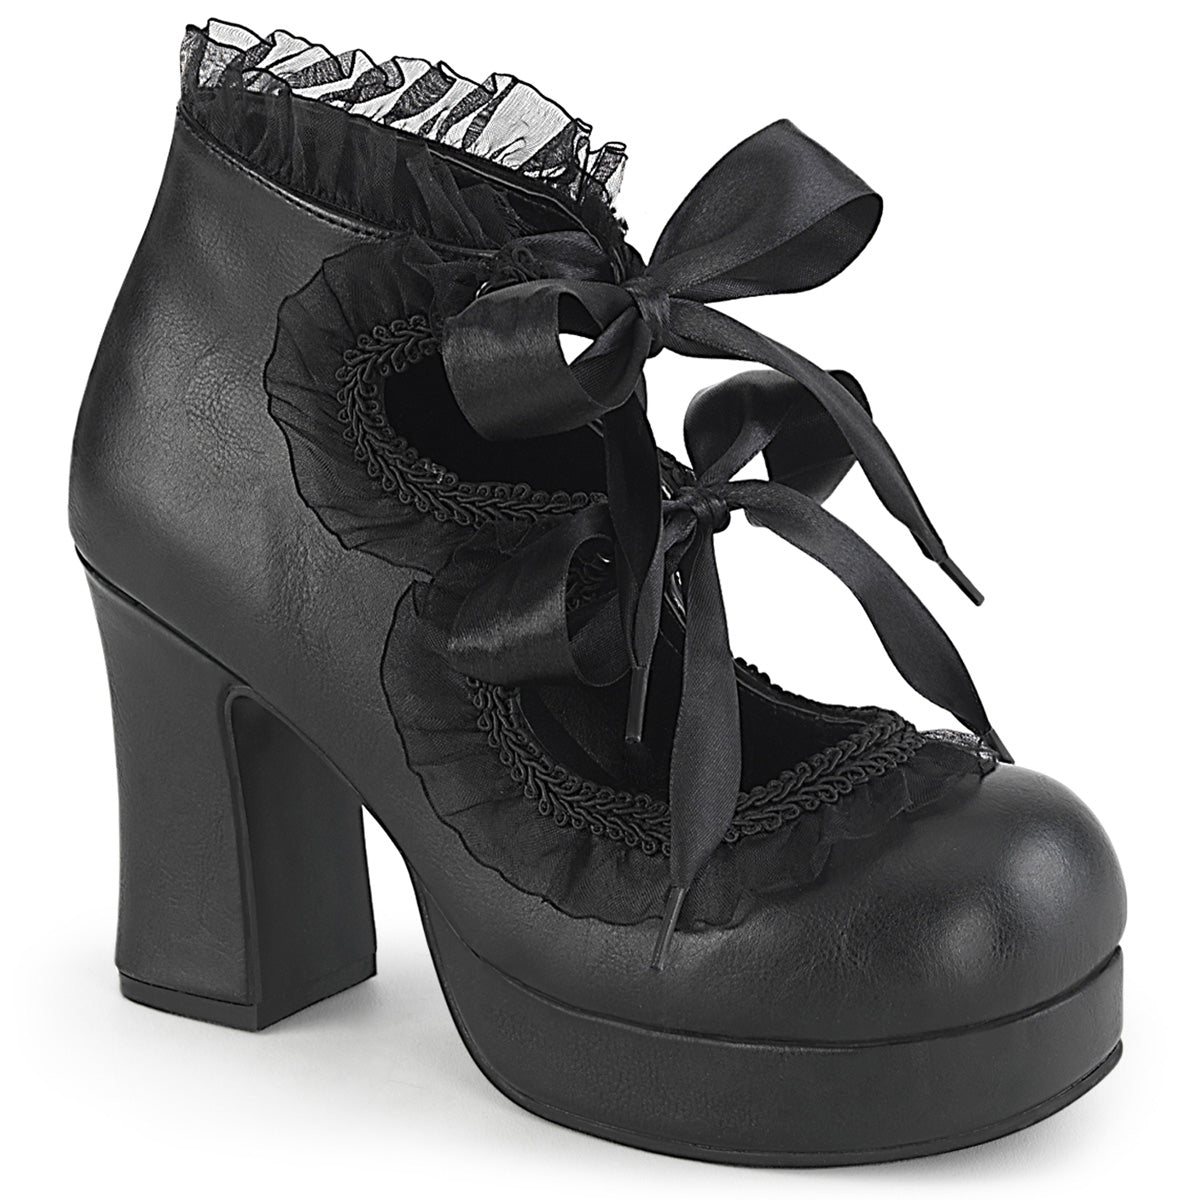 GOTHIKA-53 Alternative Footwear Demonia Women's Heels & Platform Shoes Blk Vegan Leather